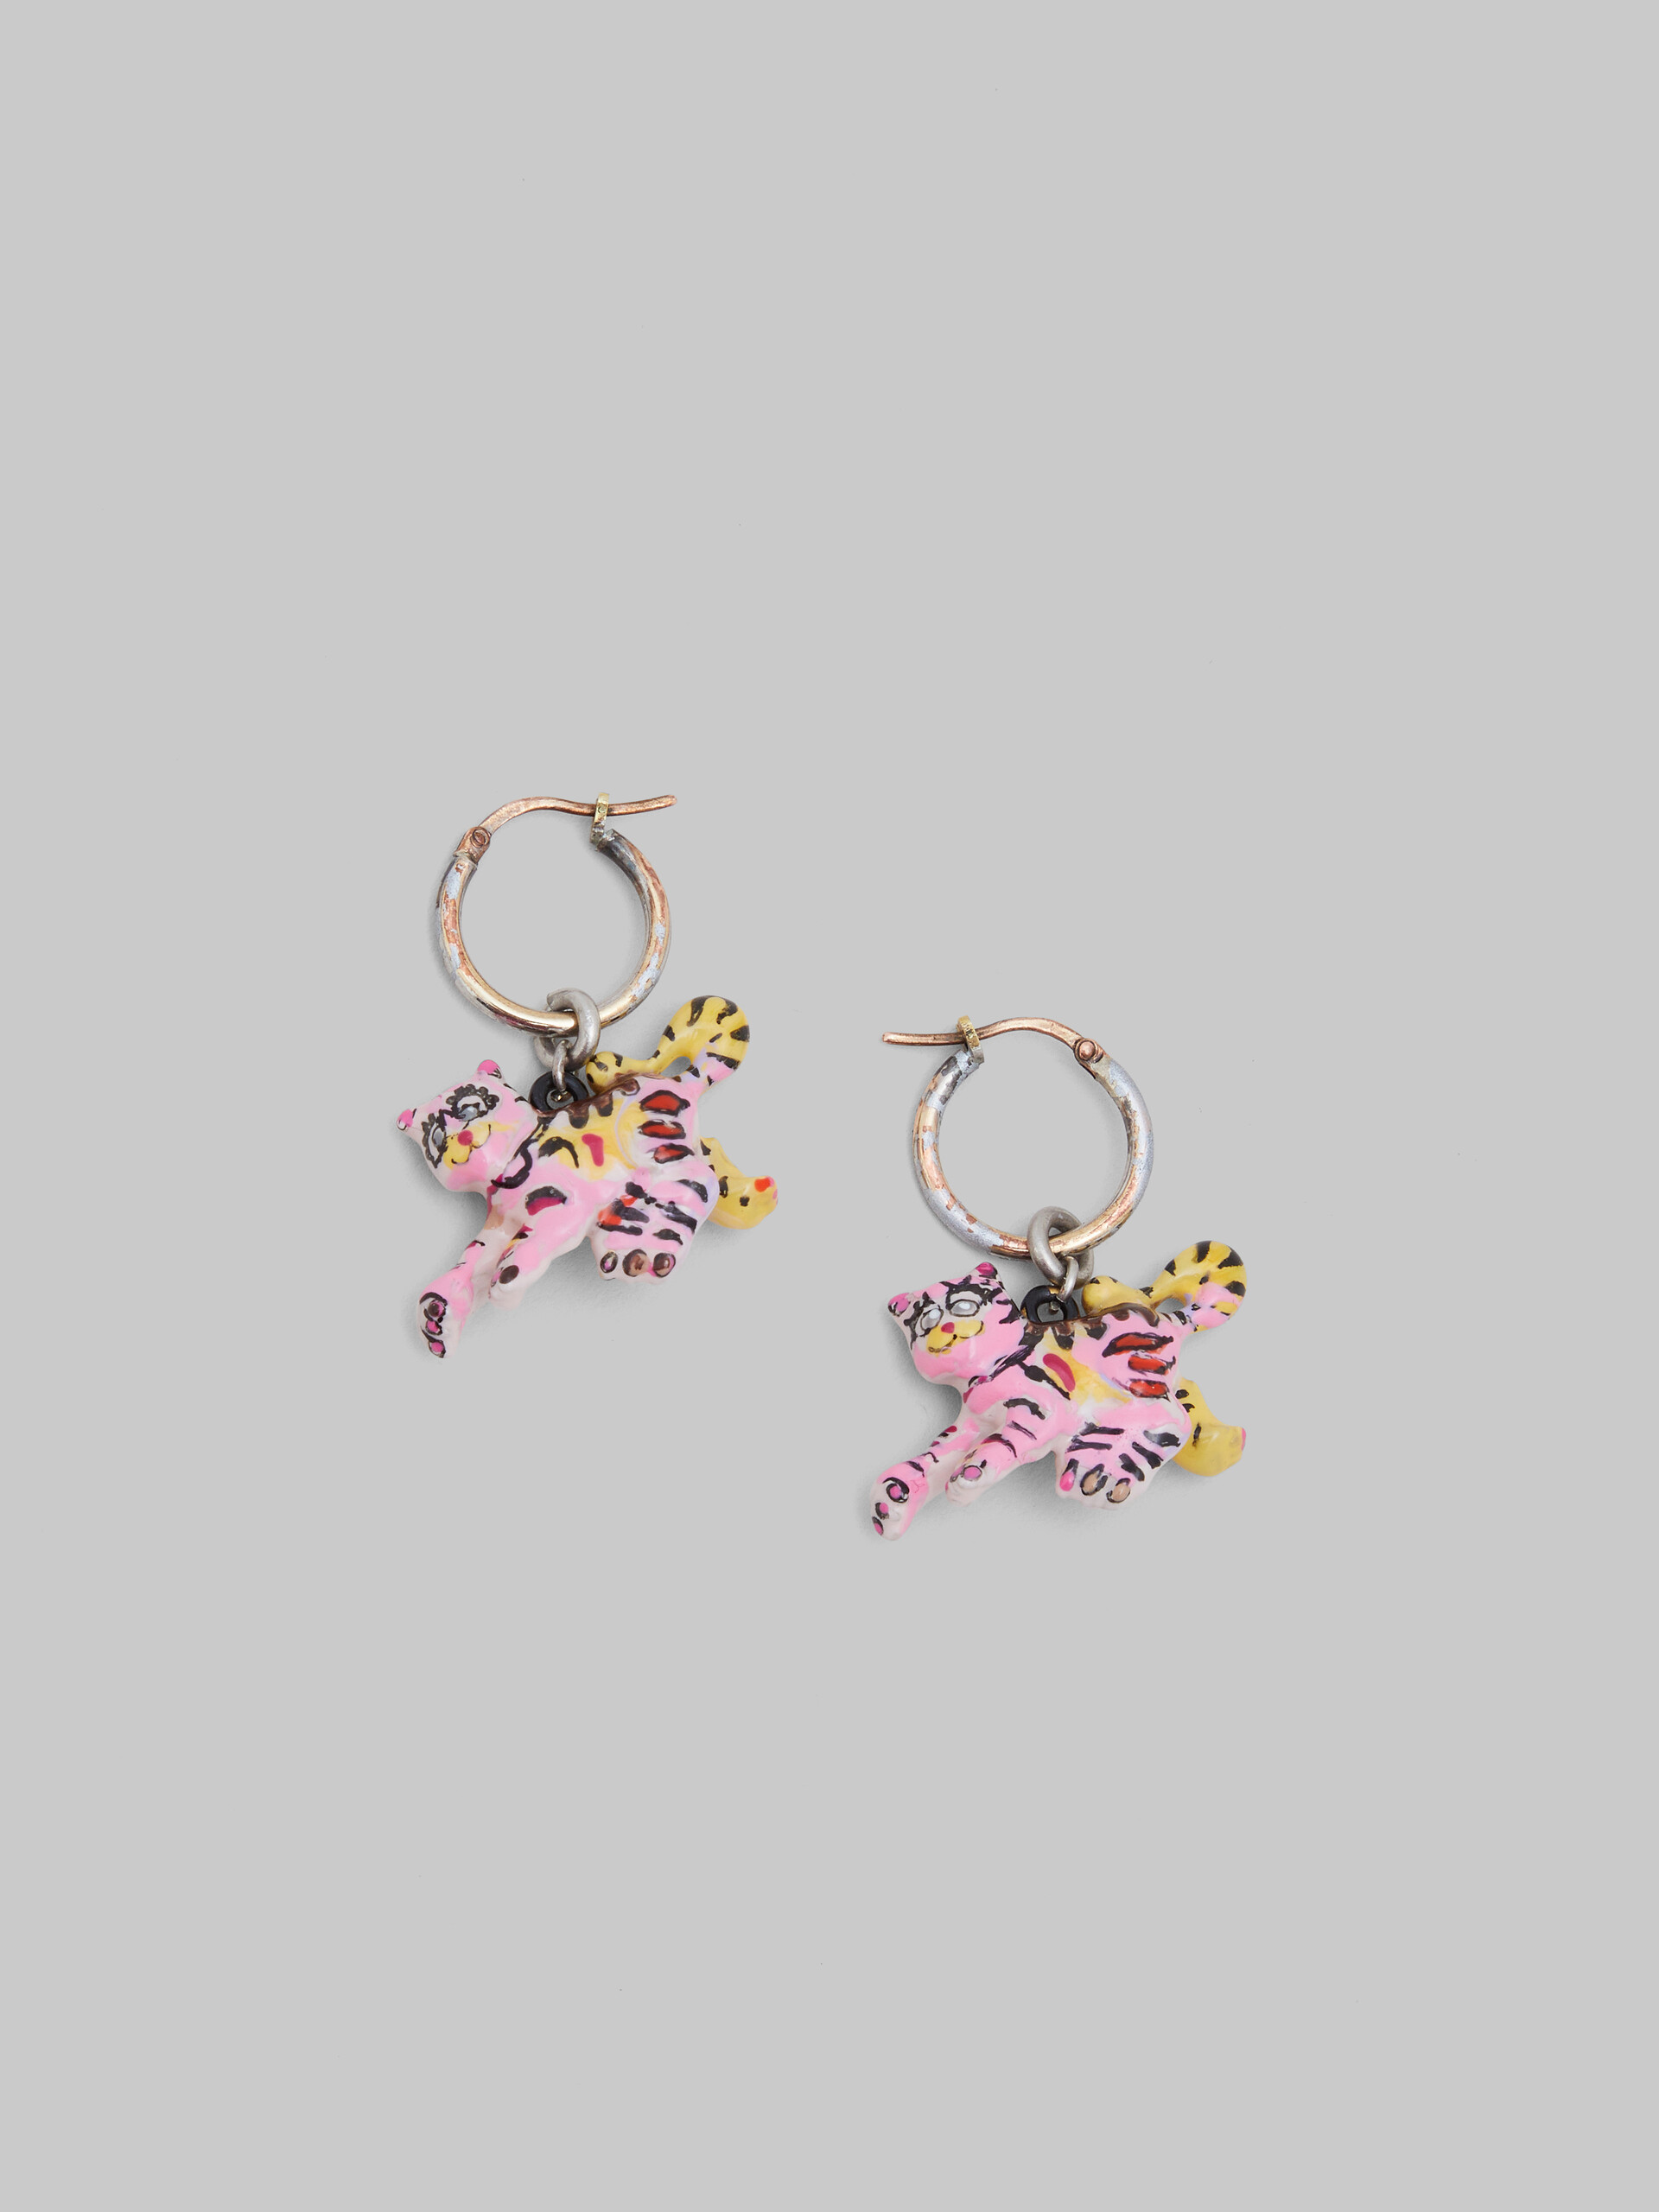 Hook earrings with tiger pendants - Earrings - Image 4